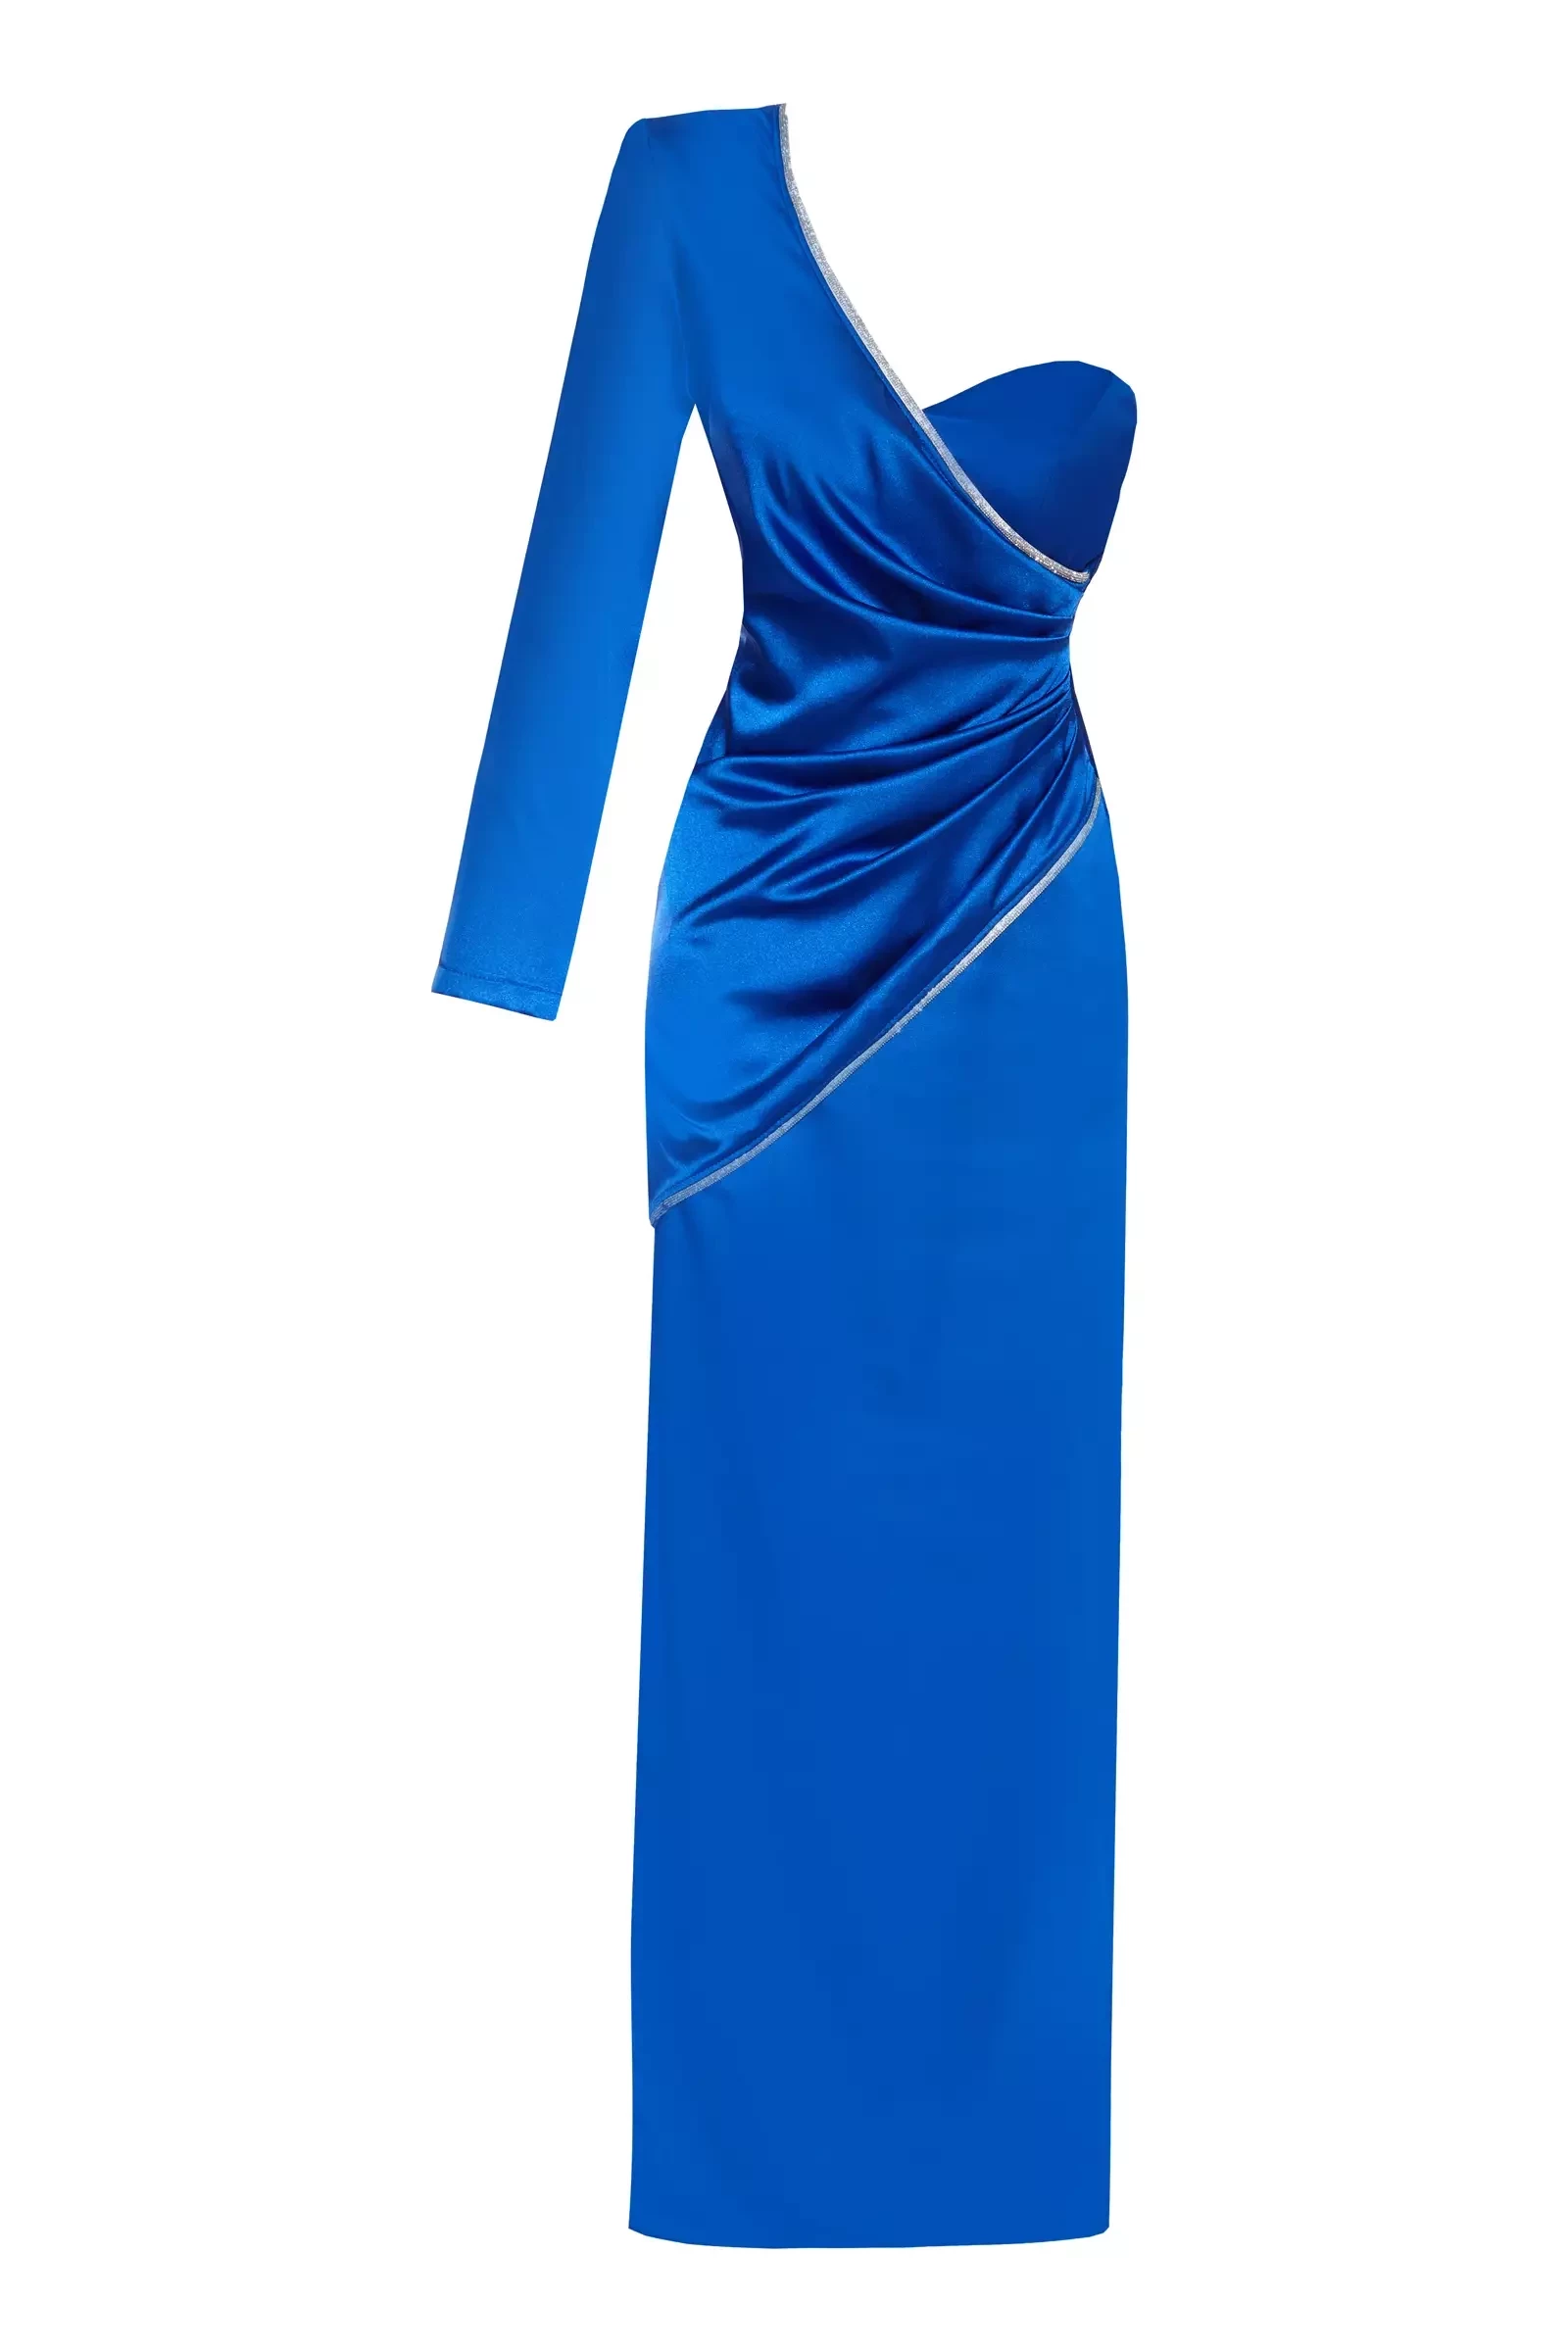 Blue satin one arm long dress